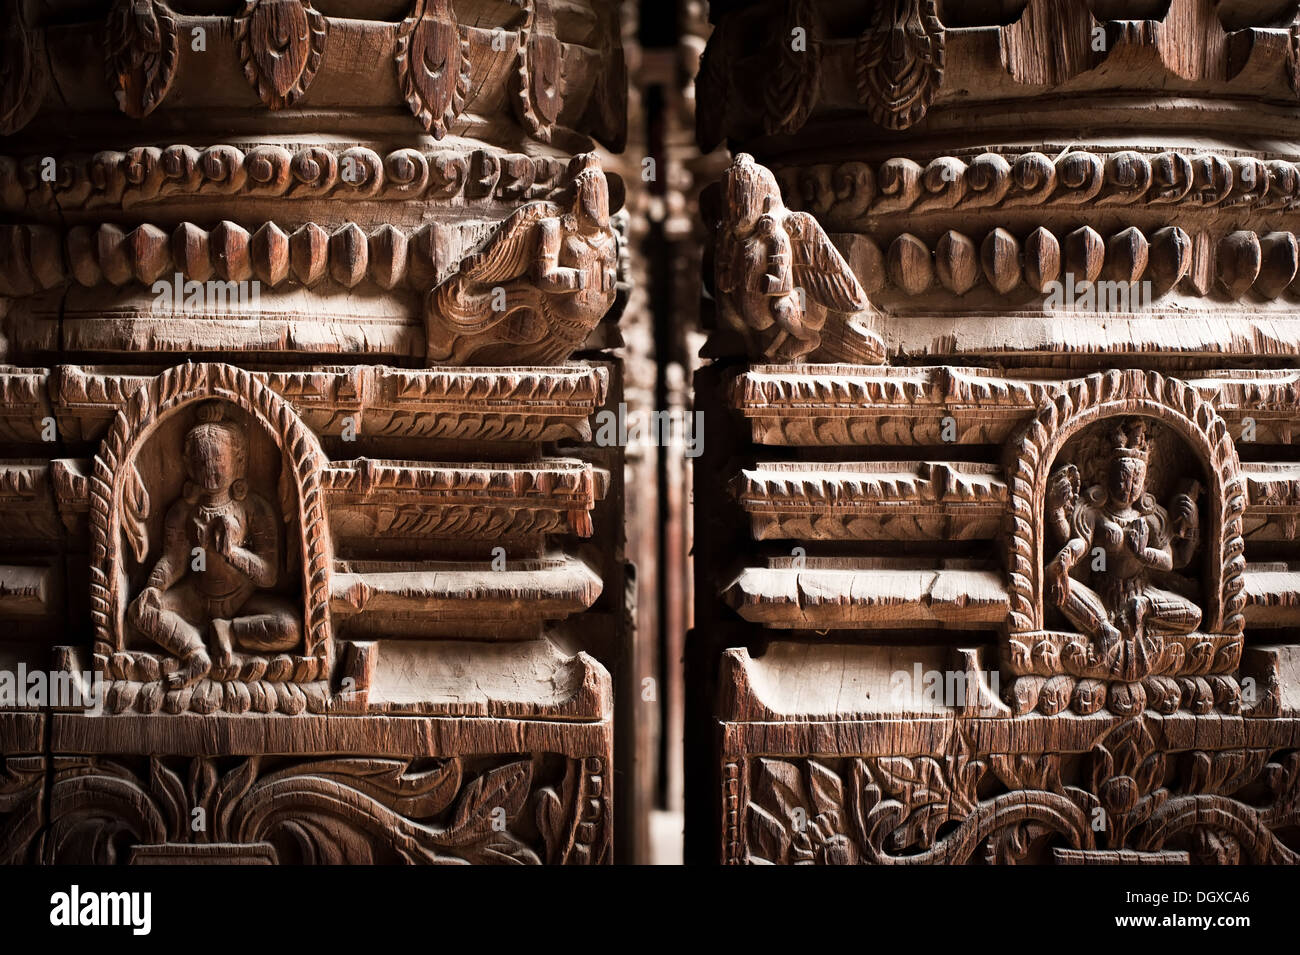 Hindu-Tempel-Architektur Detail. Hölzerne Säule mit Nepali Hindu-Gott. Nepal, Kathmandu Durbar Square Stockfoto